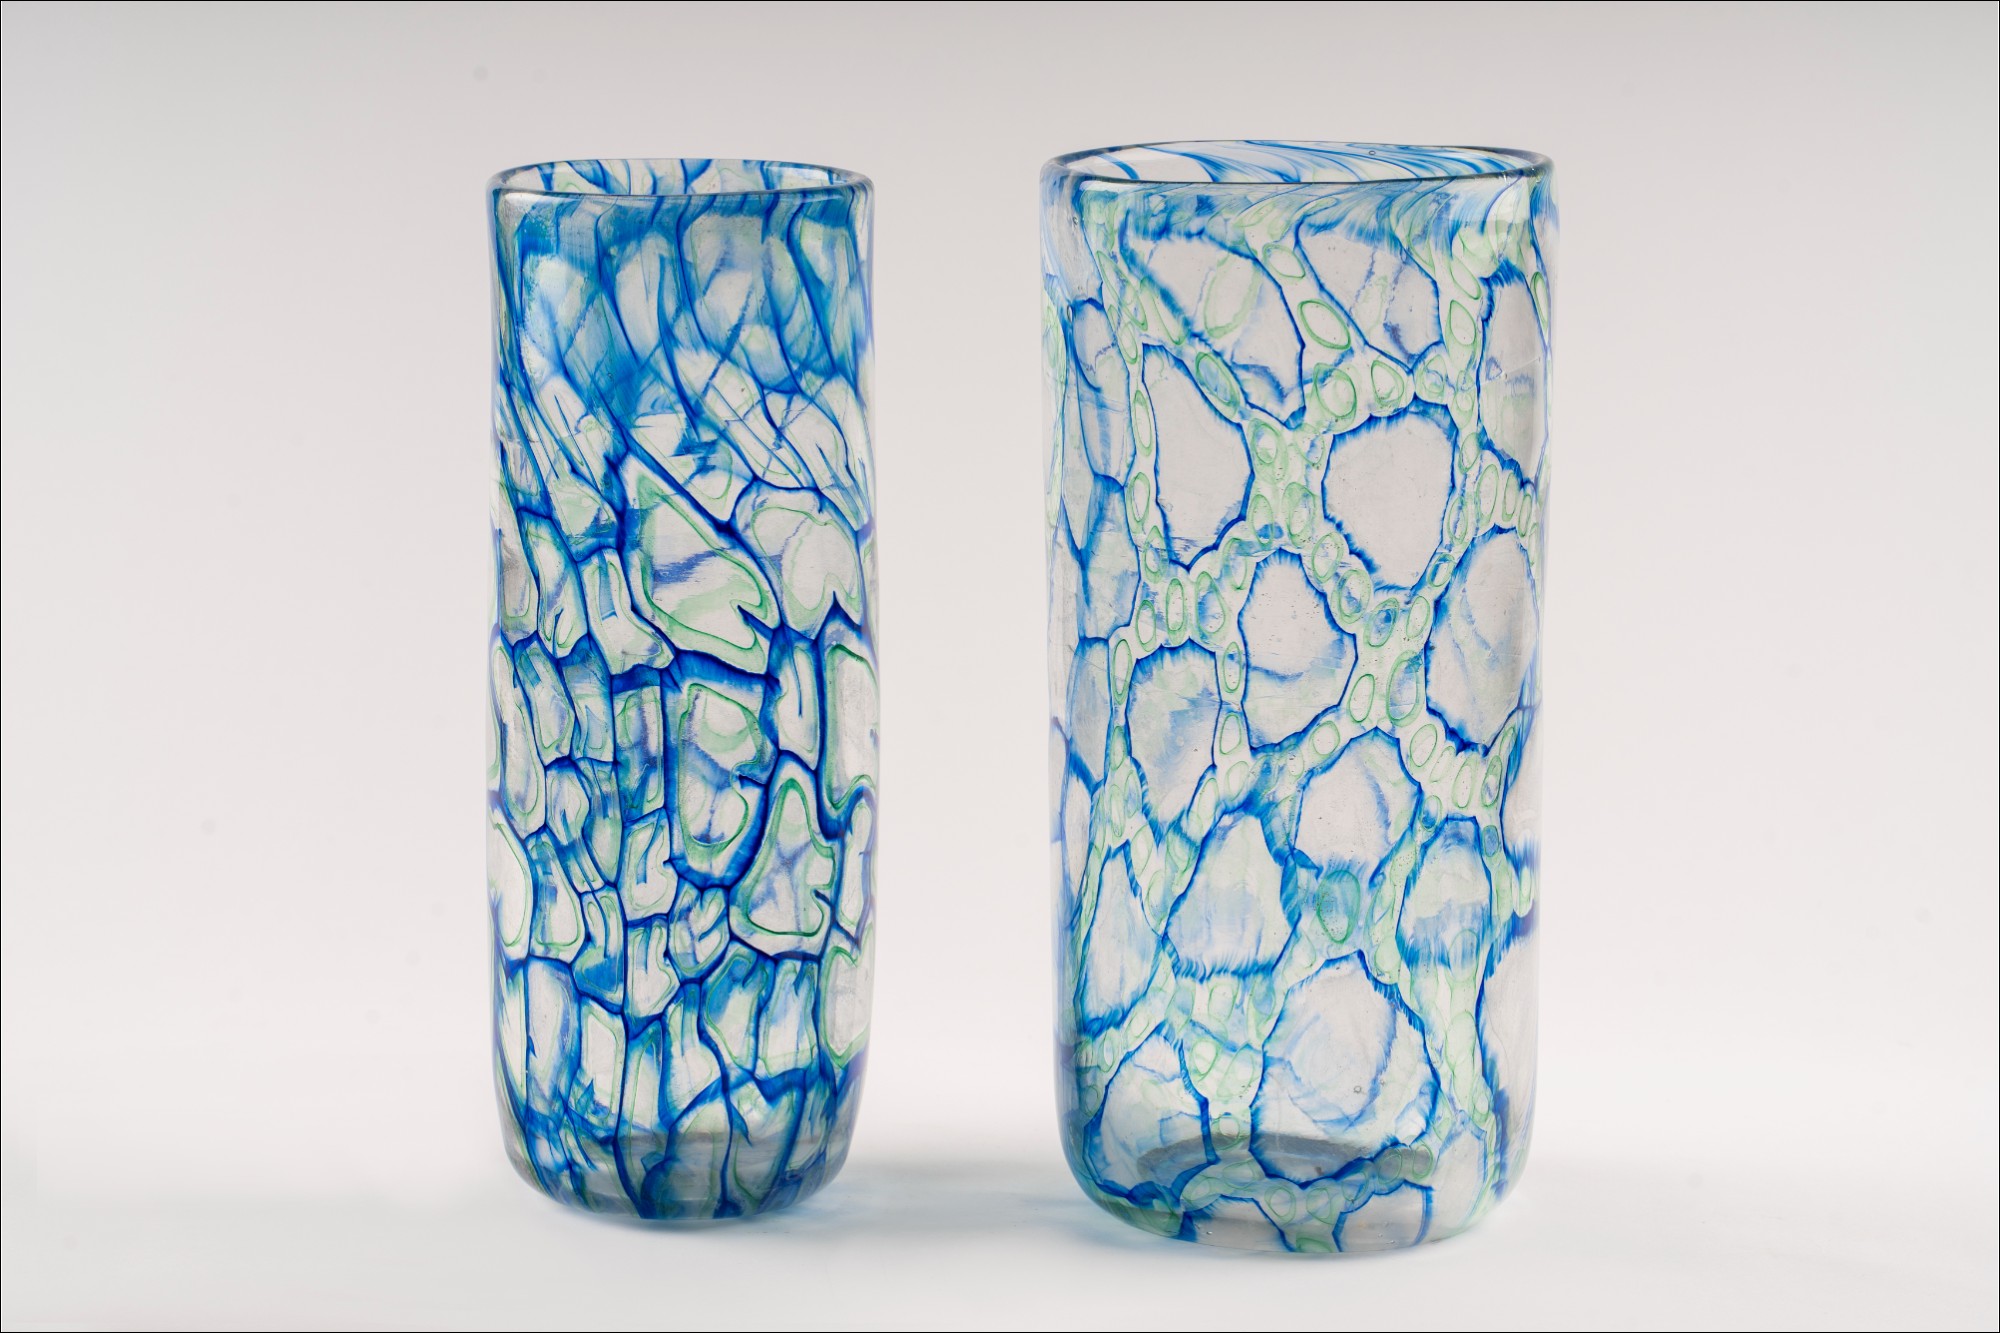 Arjun Rathi unveils exclusive glass vase collection